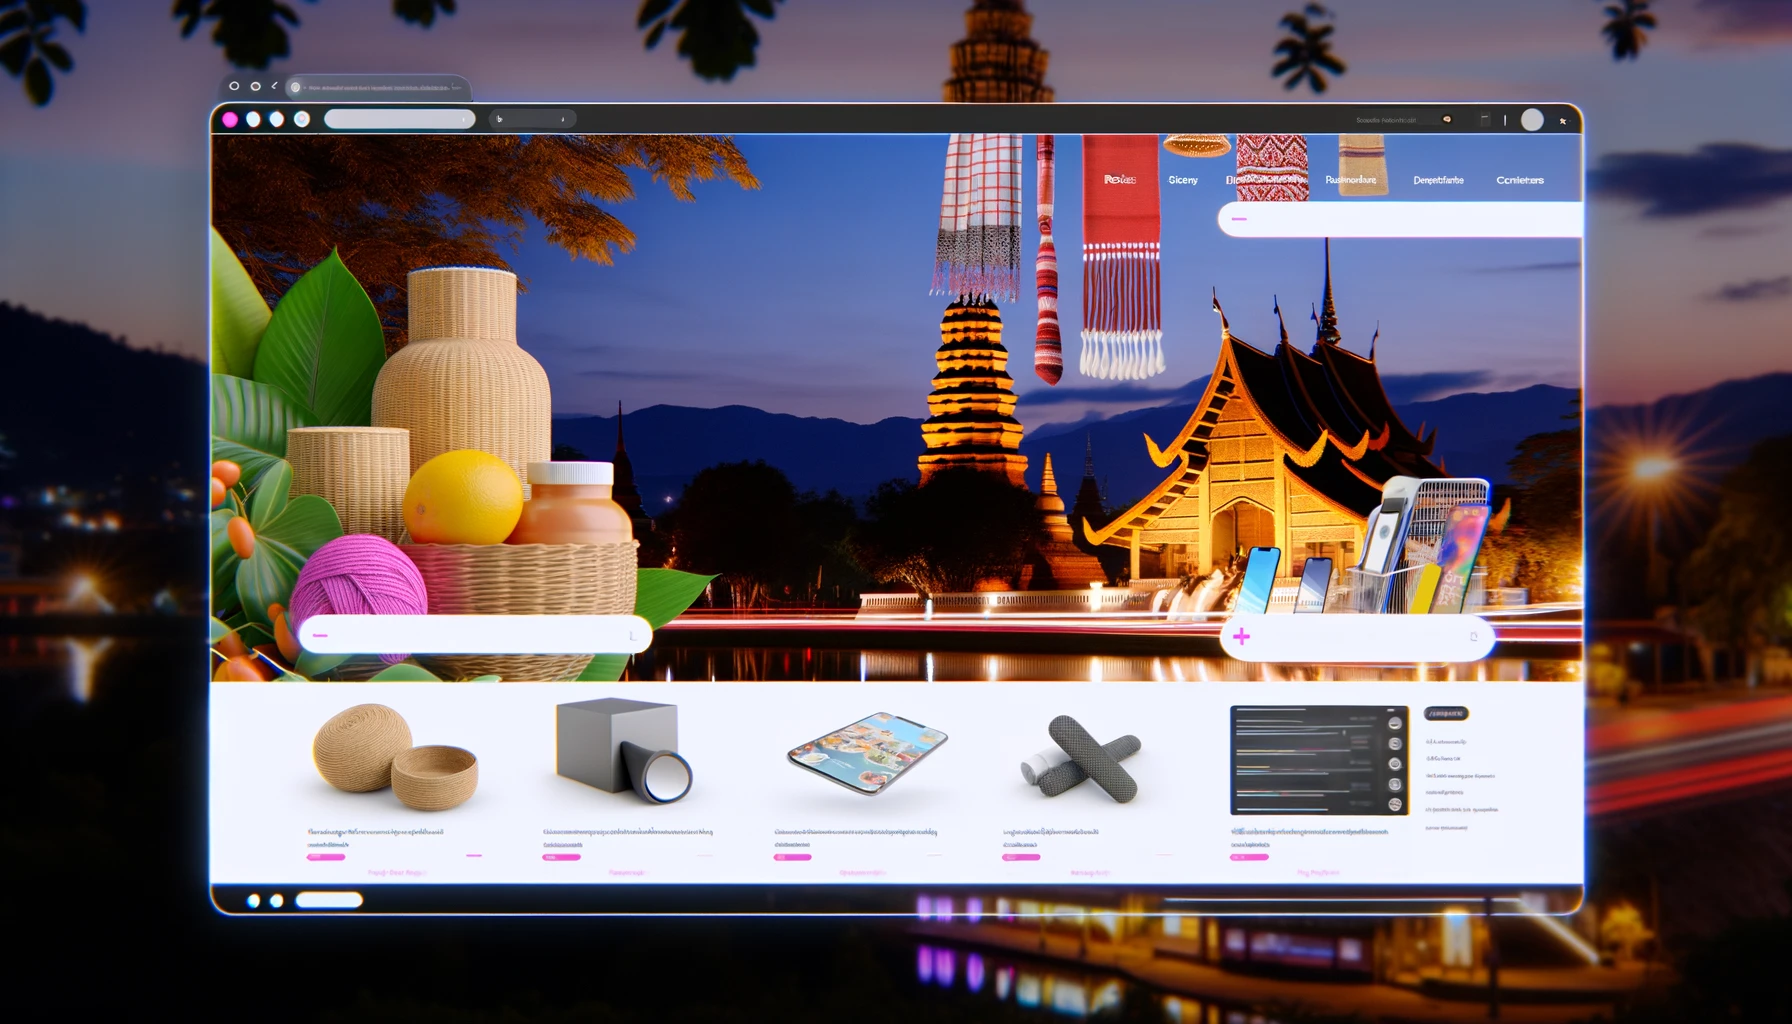 Dynamic e-commerce platform showcasing Chiang Mai's unique retail offerings, designed by Graphio Creative Studio."